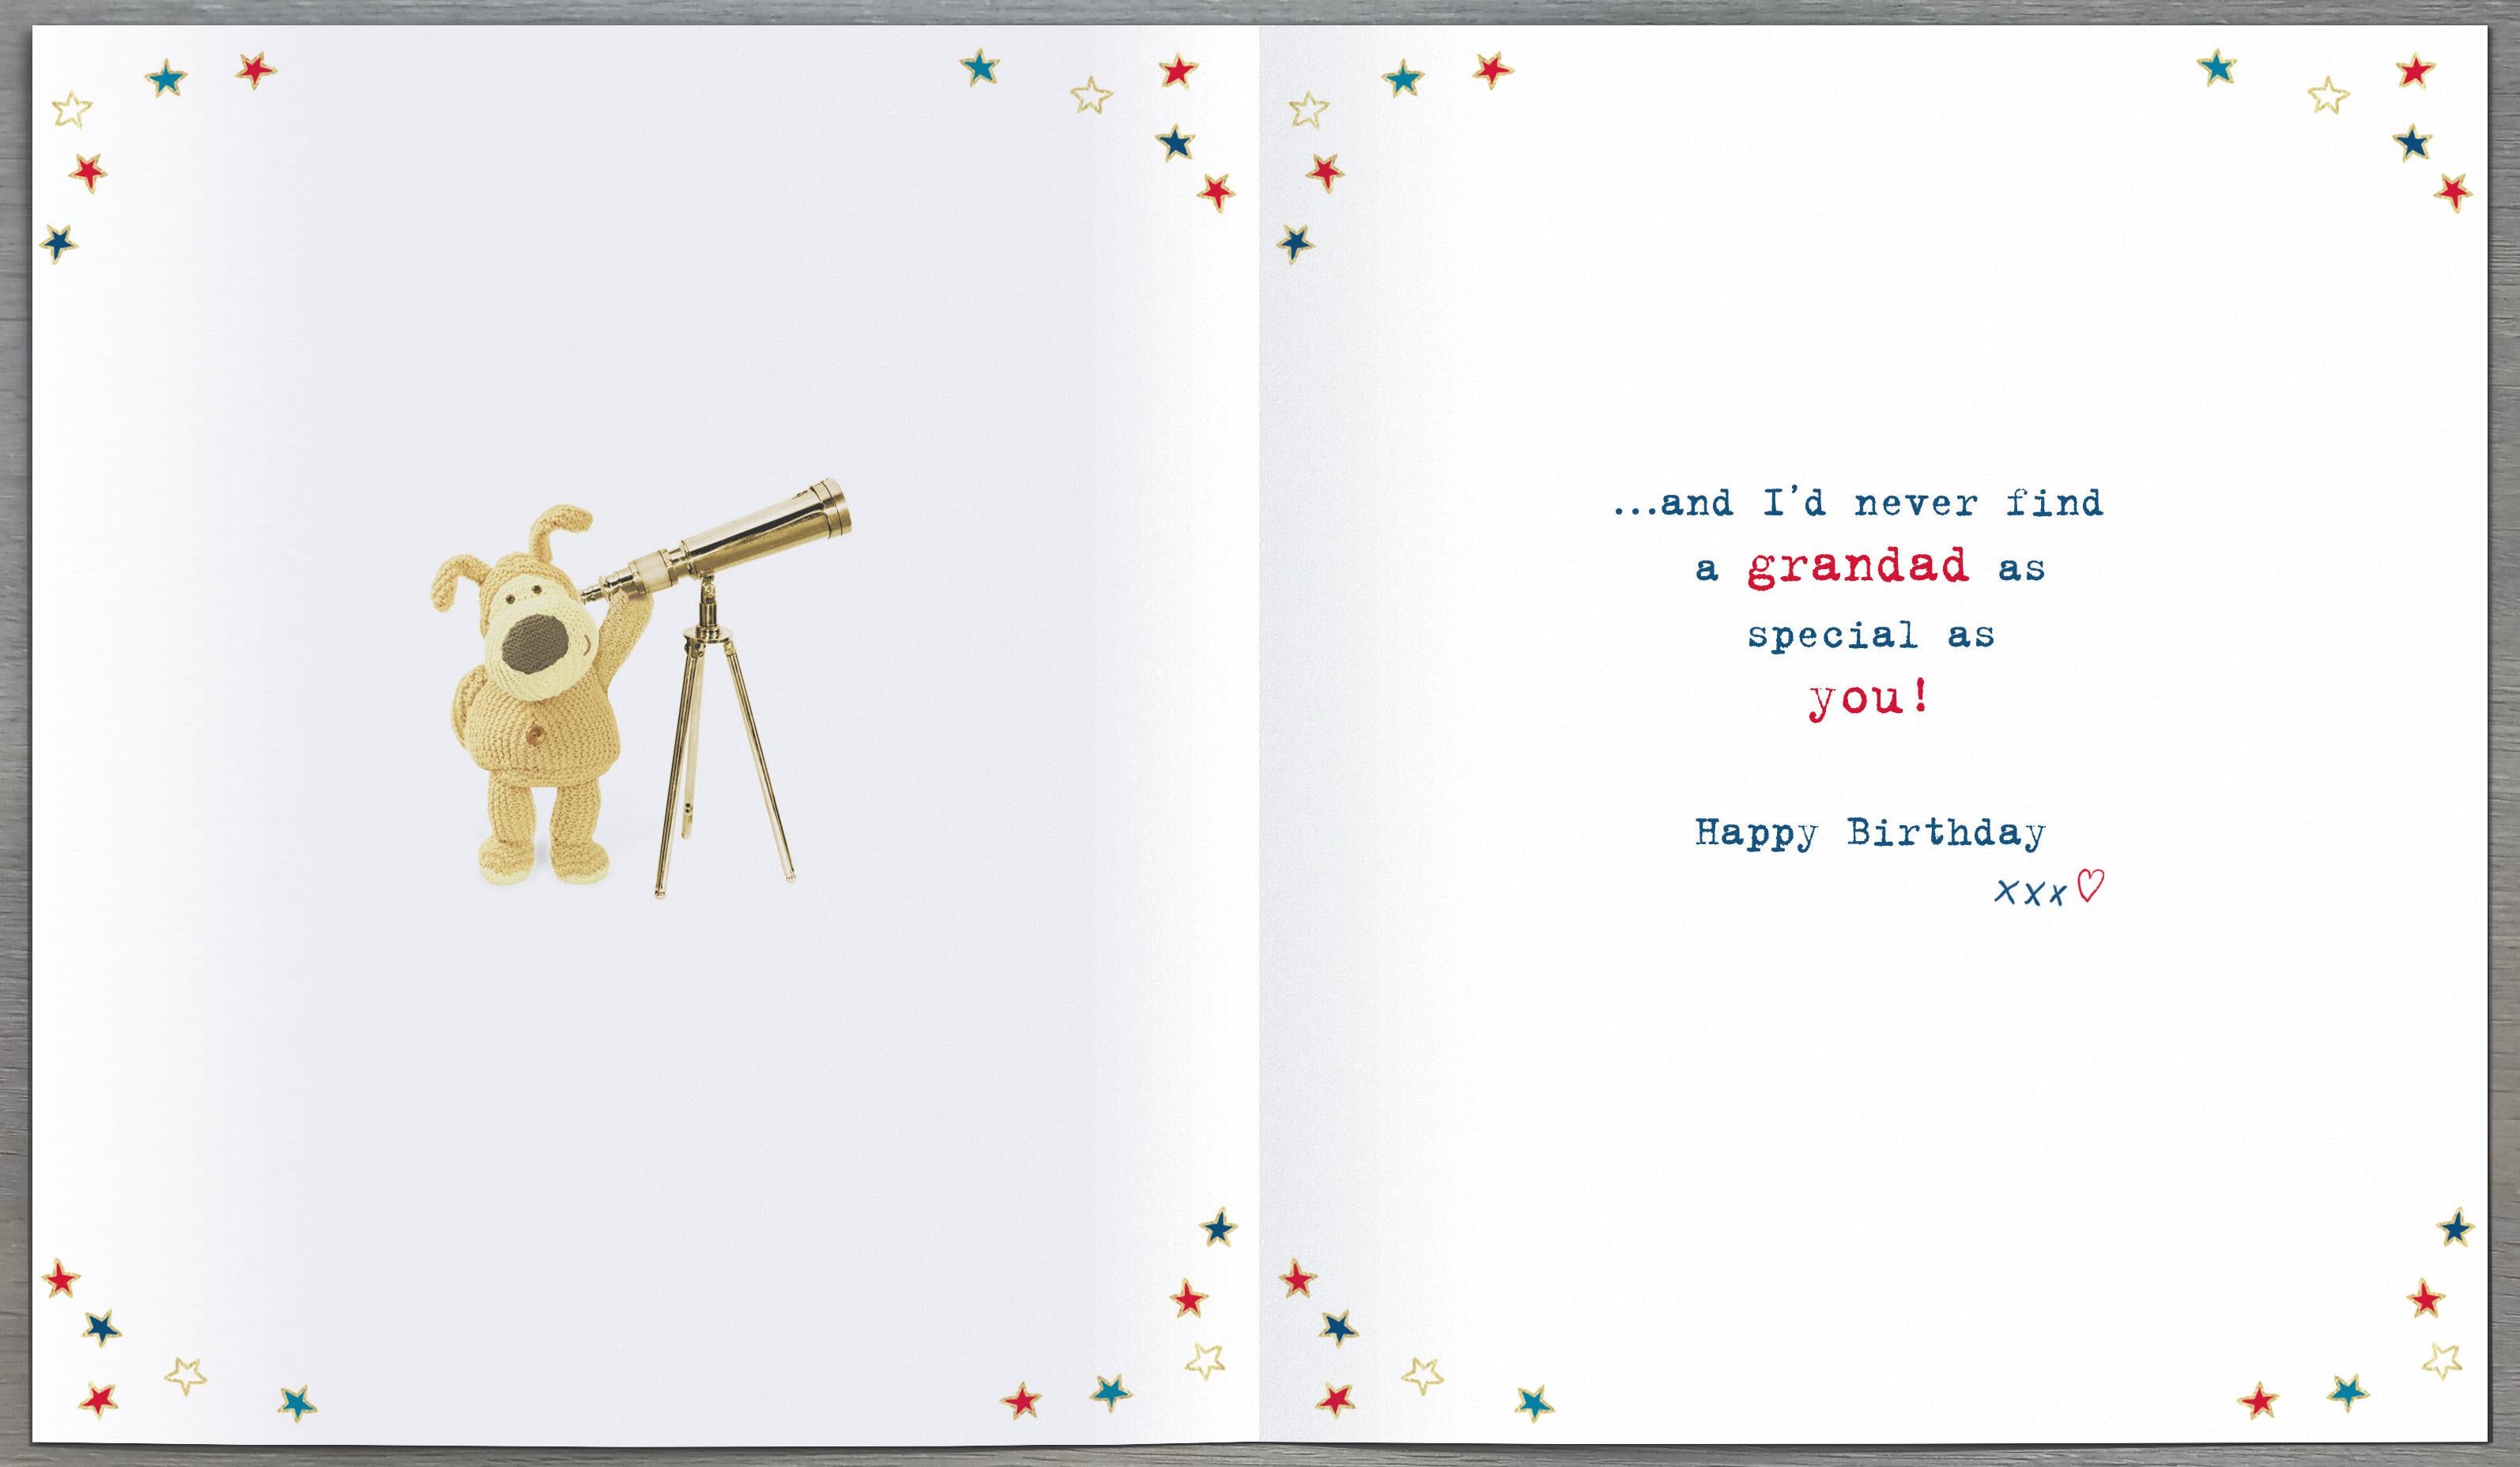 Inside of Very Special Grandad Telescope Birthday Greetings Card